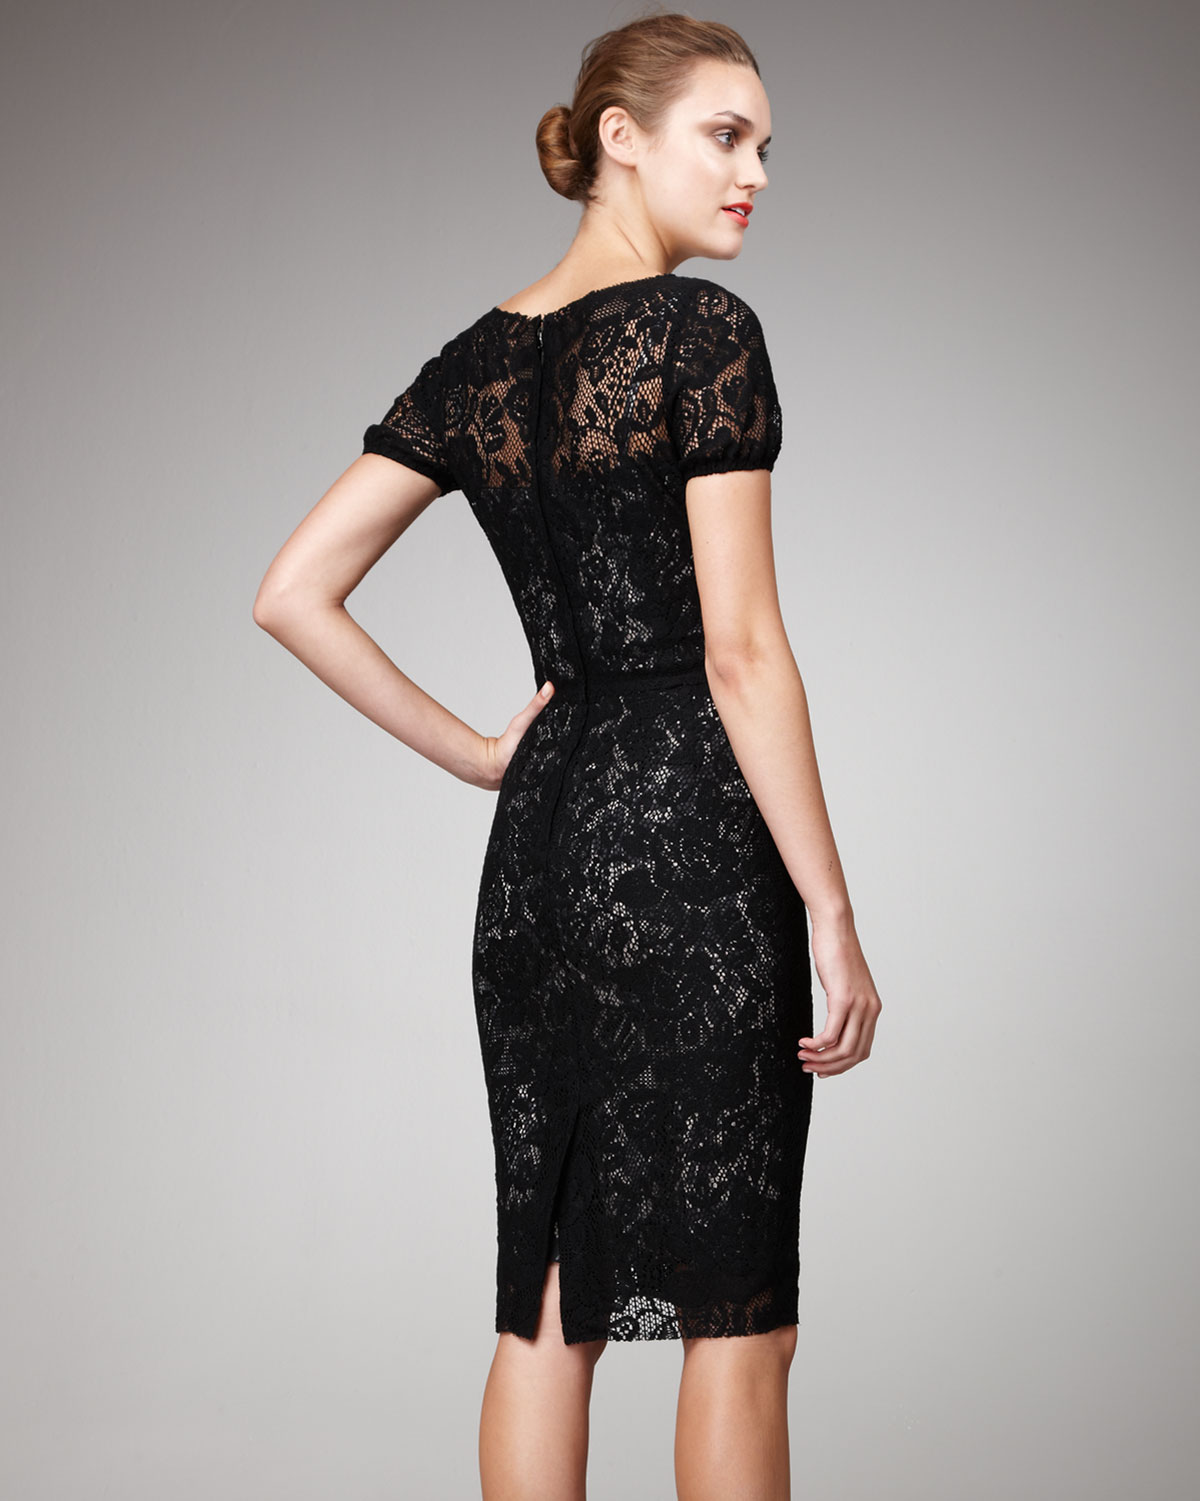 Lyst - Dolce & Gabbana Short-sleeve Lace Dress in Black